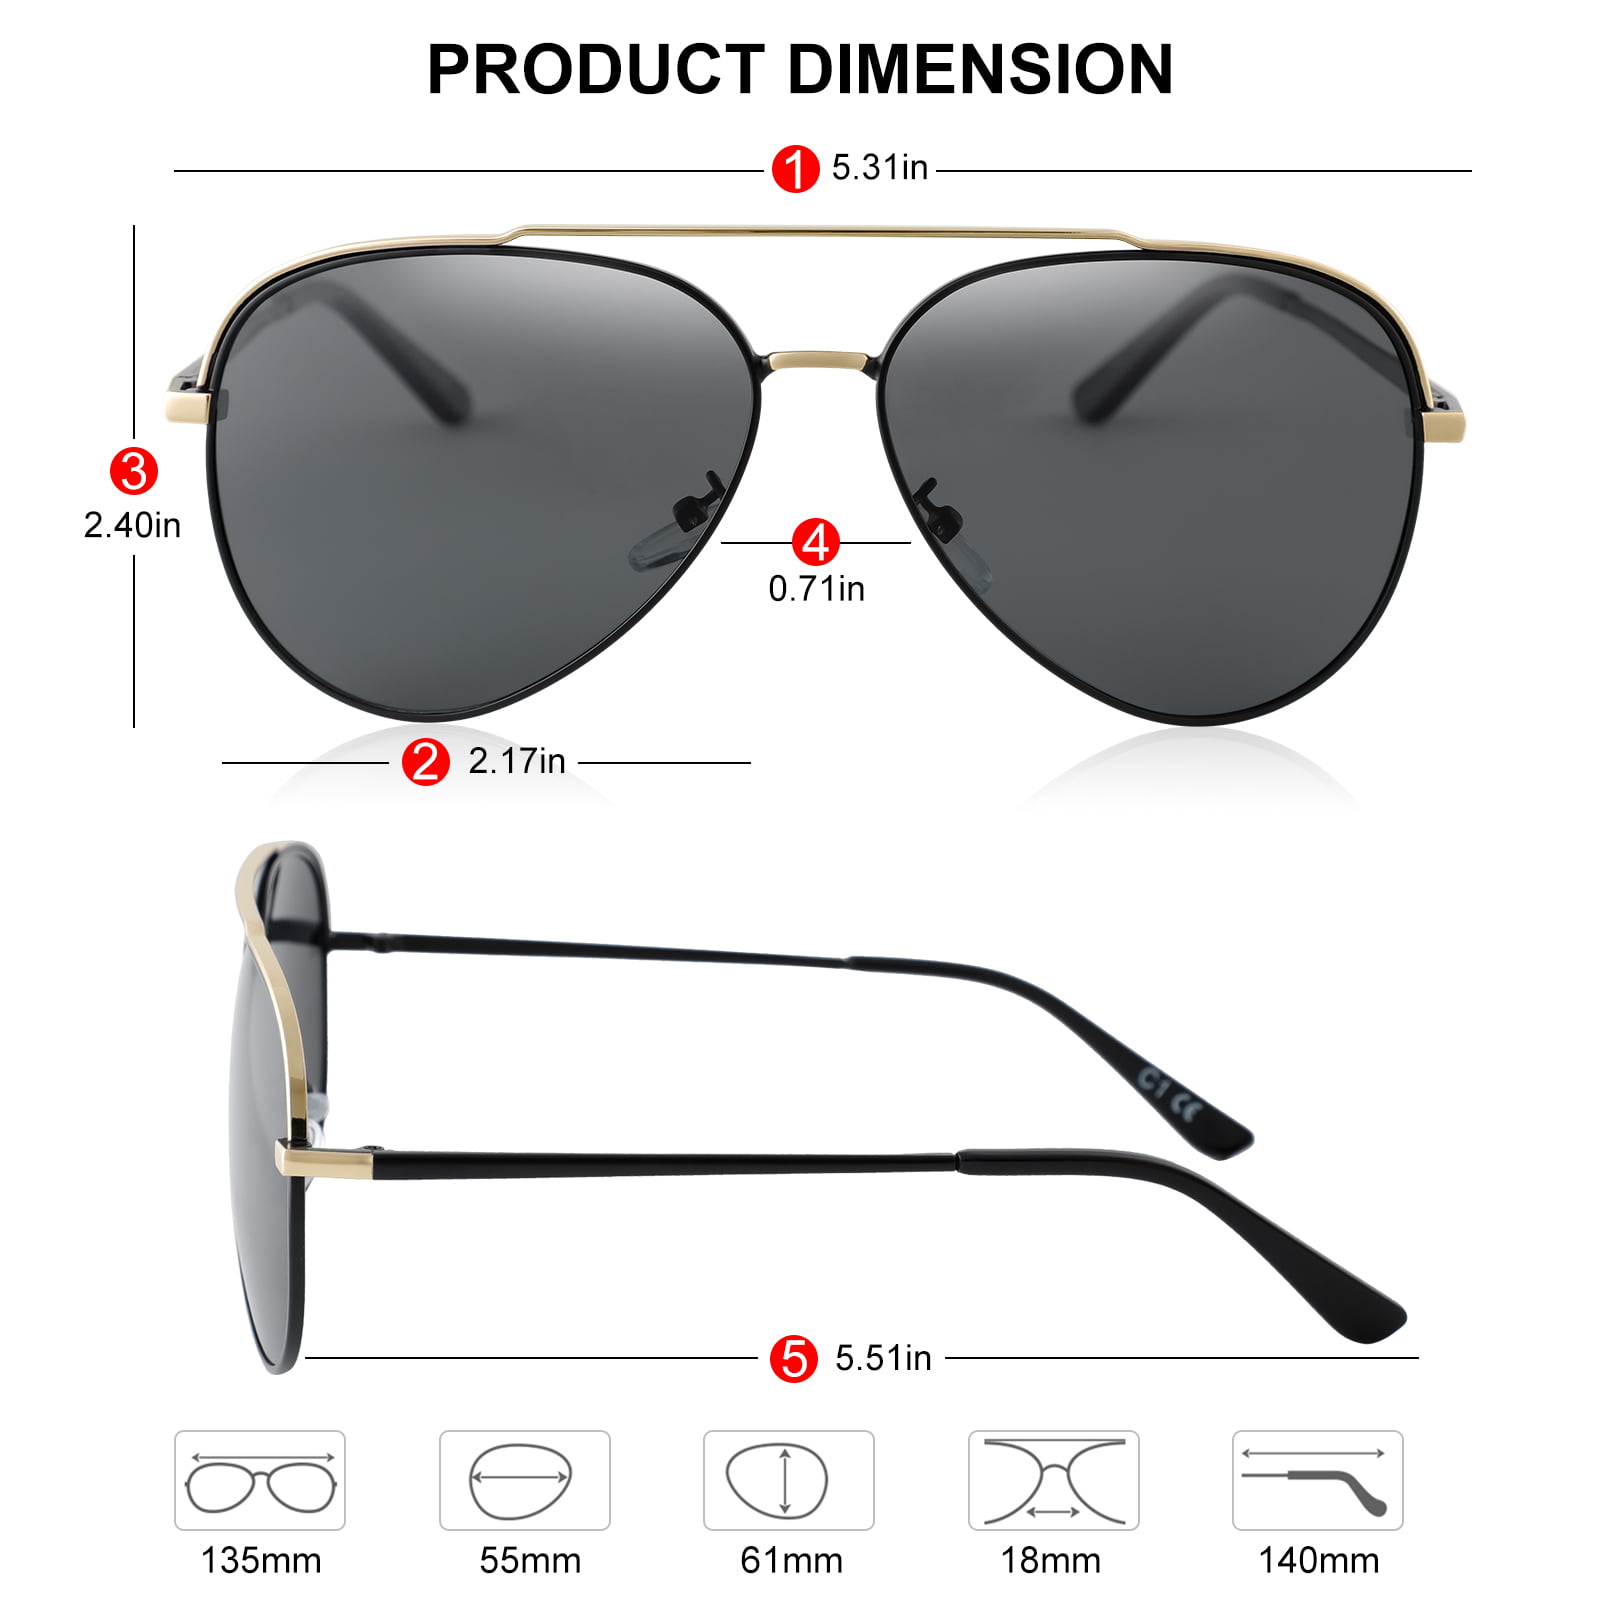 Polarized Rectangular Aviator Sunglasses for Men in Gunmetal / Grey - Military Style Pilot Metal Sunglasses UV 400 Protection